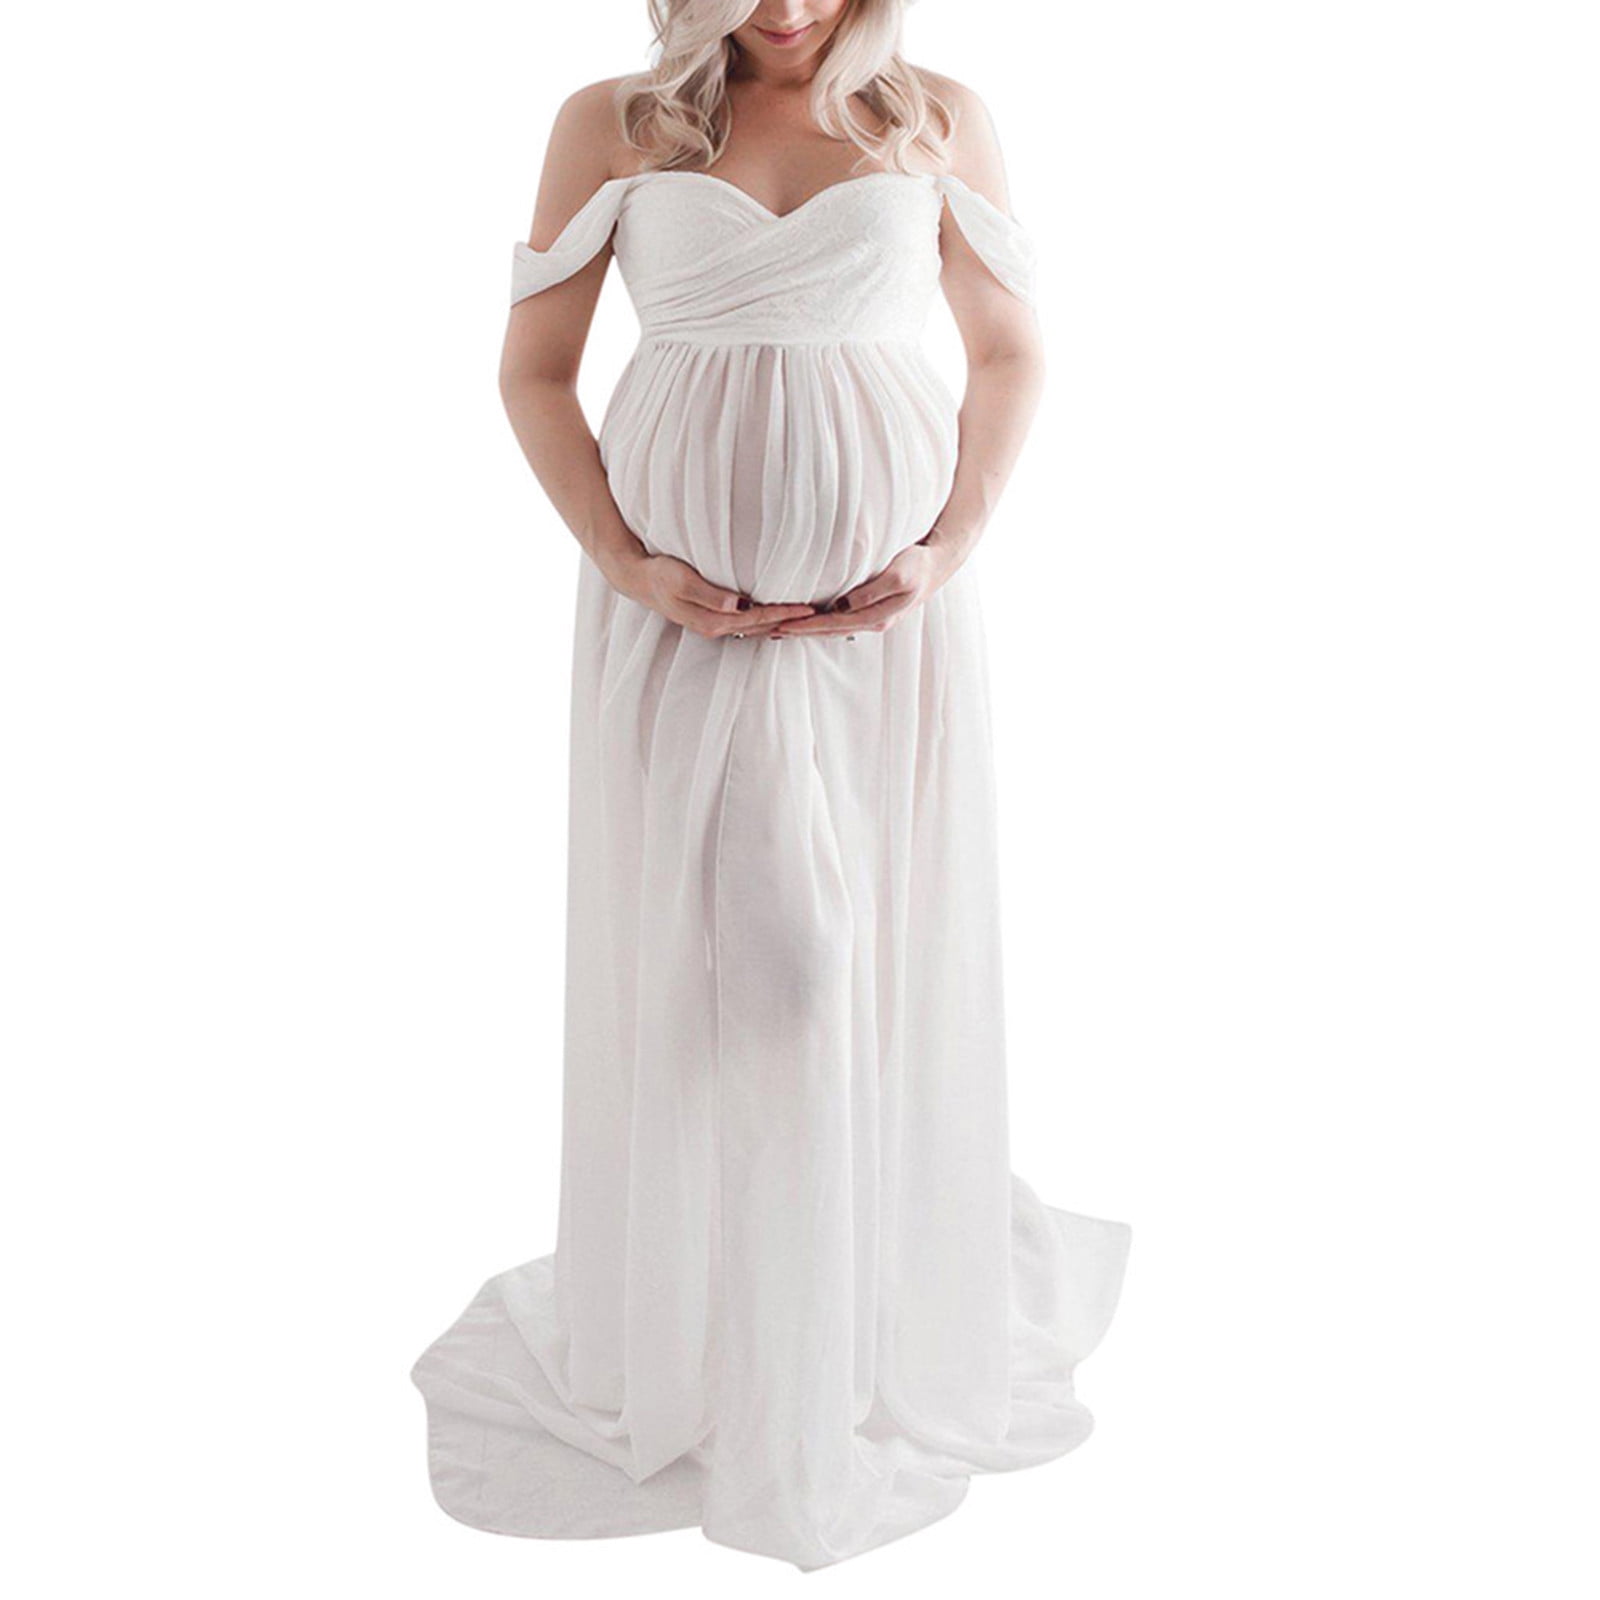 AKAFMK Summer Maternity Clothes,Maternity Dresses,Women Off Shoulder ...